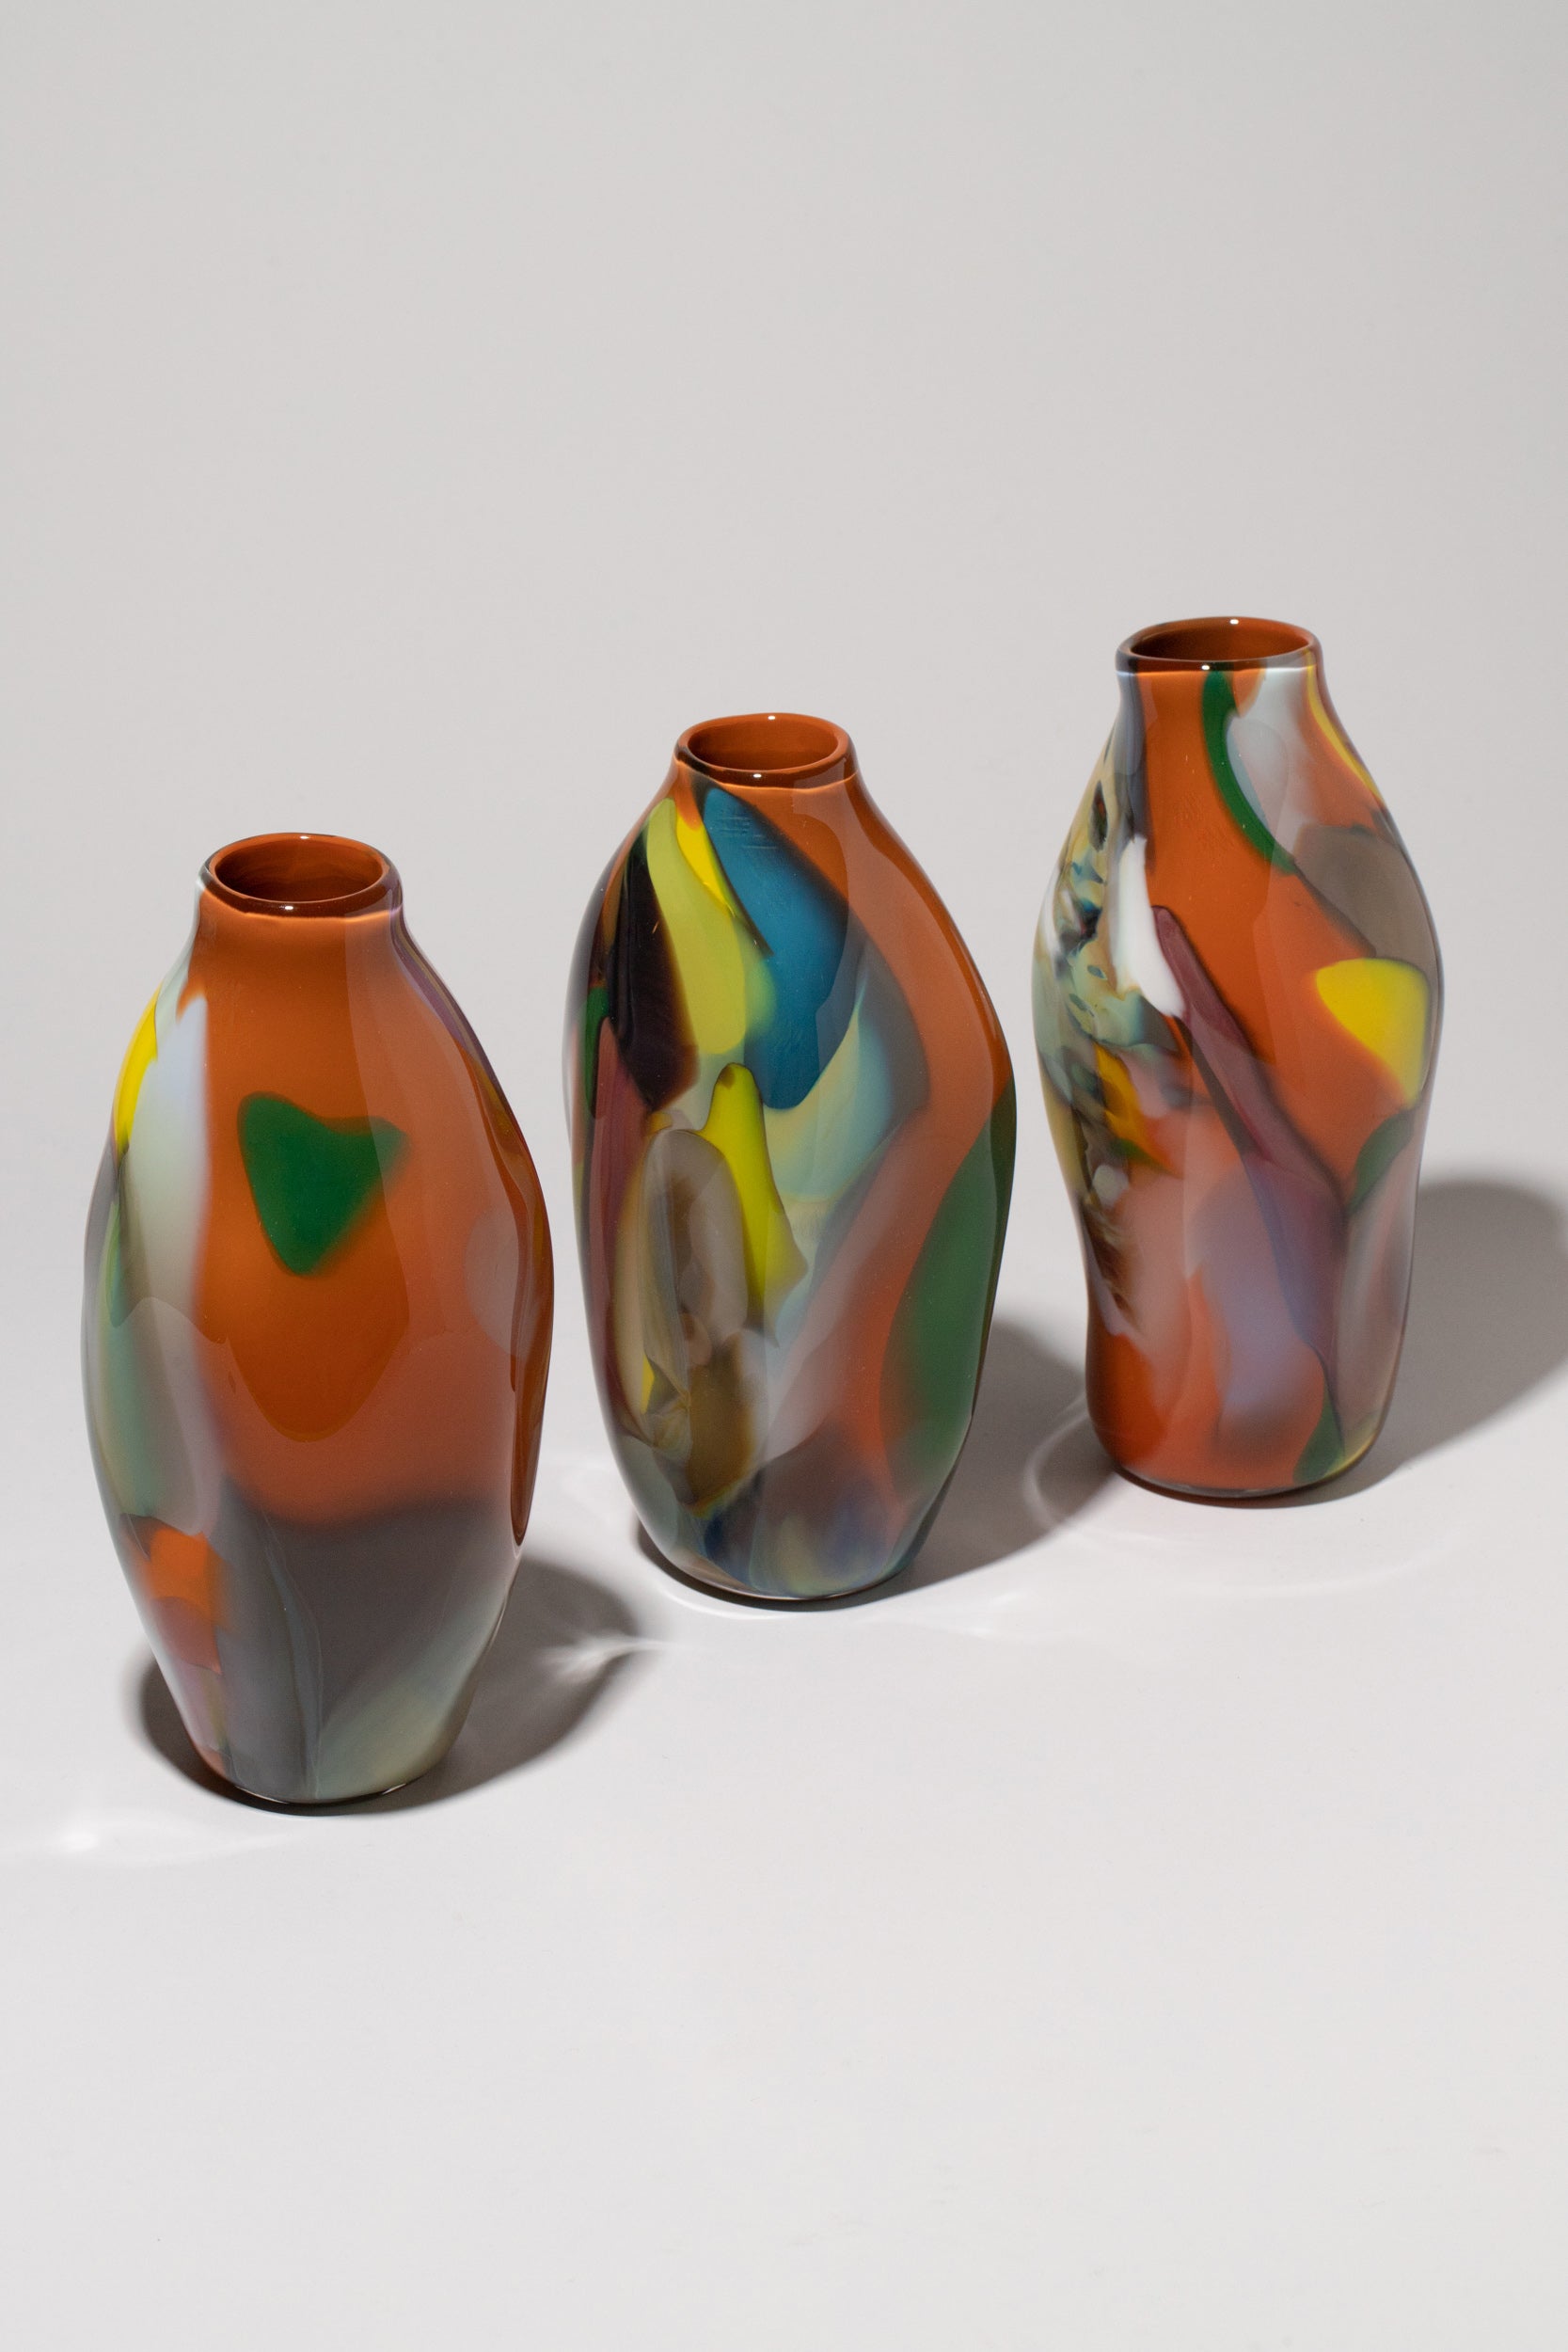 Group of BaleFire Glass Small Orange Epiphany Vases on light color background.